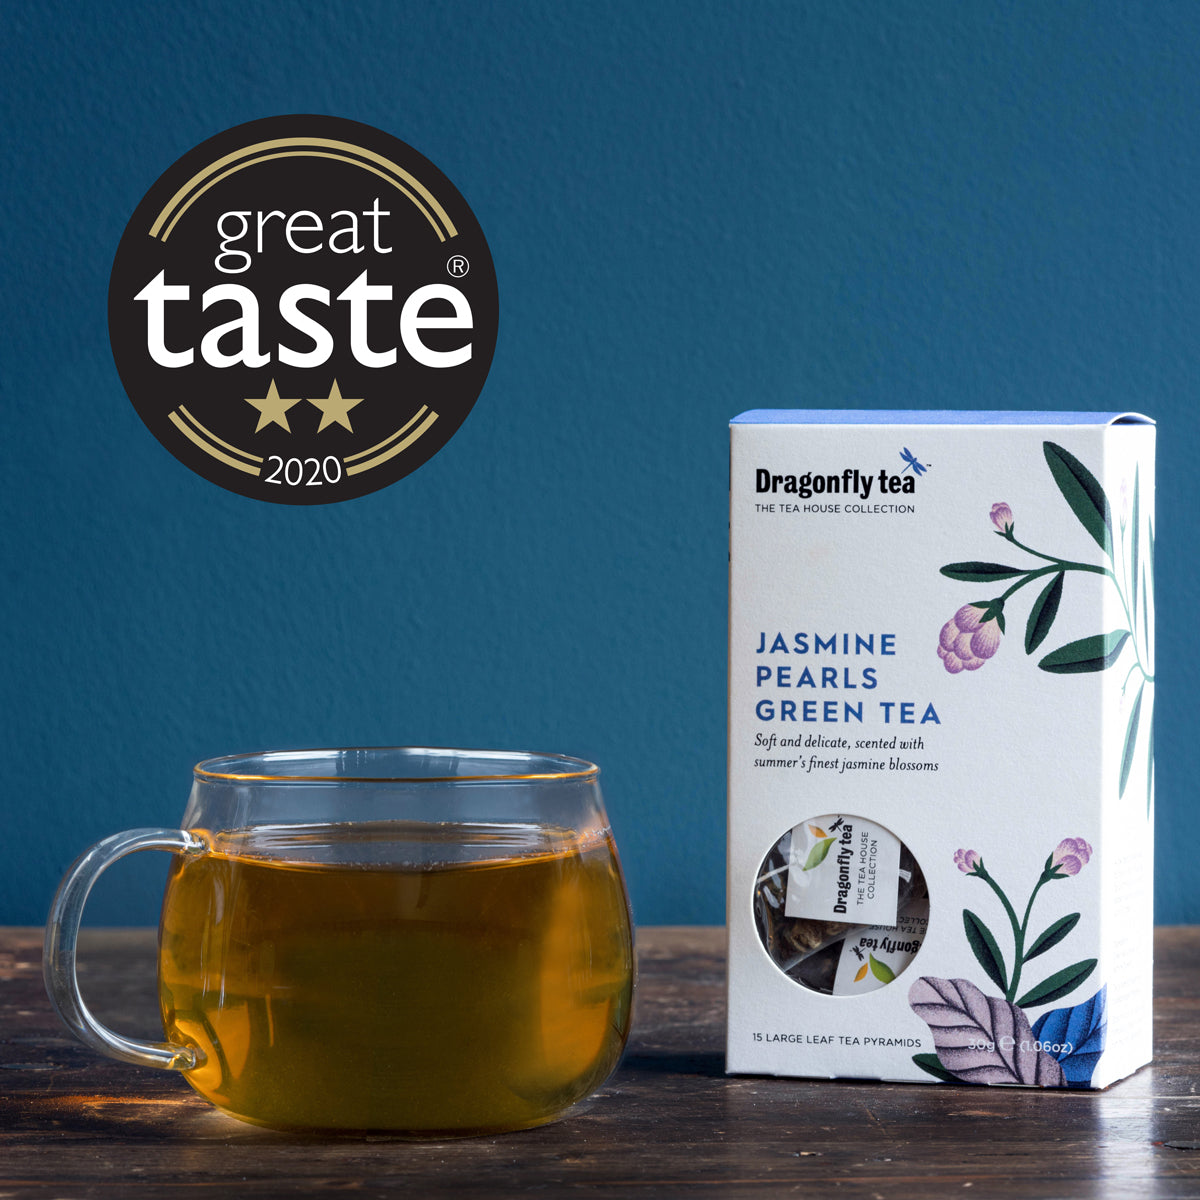 Dragonfly Tea wins Great Taste Awards!